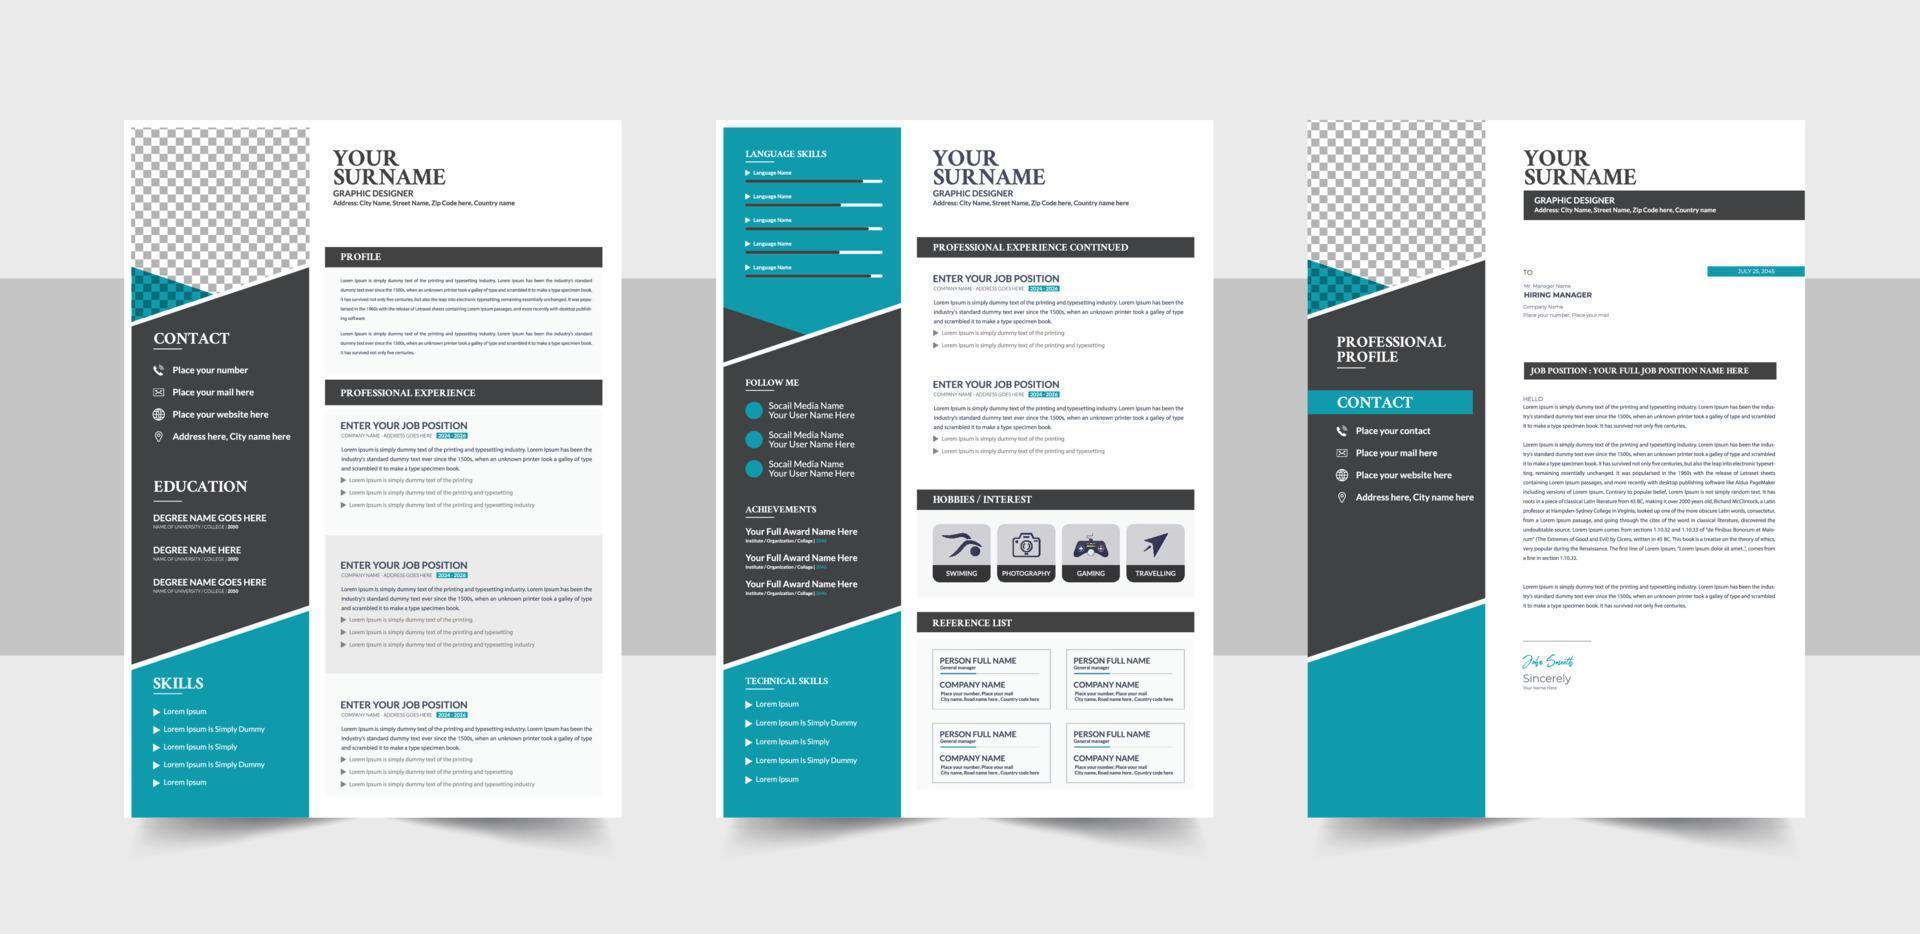 Resume Template Design For Corporate Job Applications, Creative CV resume templates Vector Design cover letter job applications colors, cv design, multipurpose resume design